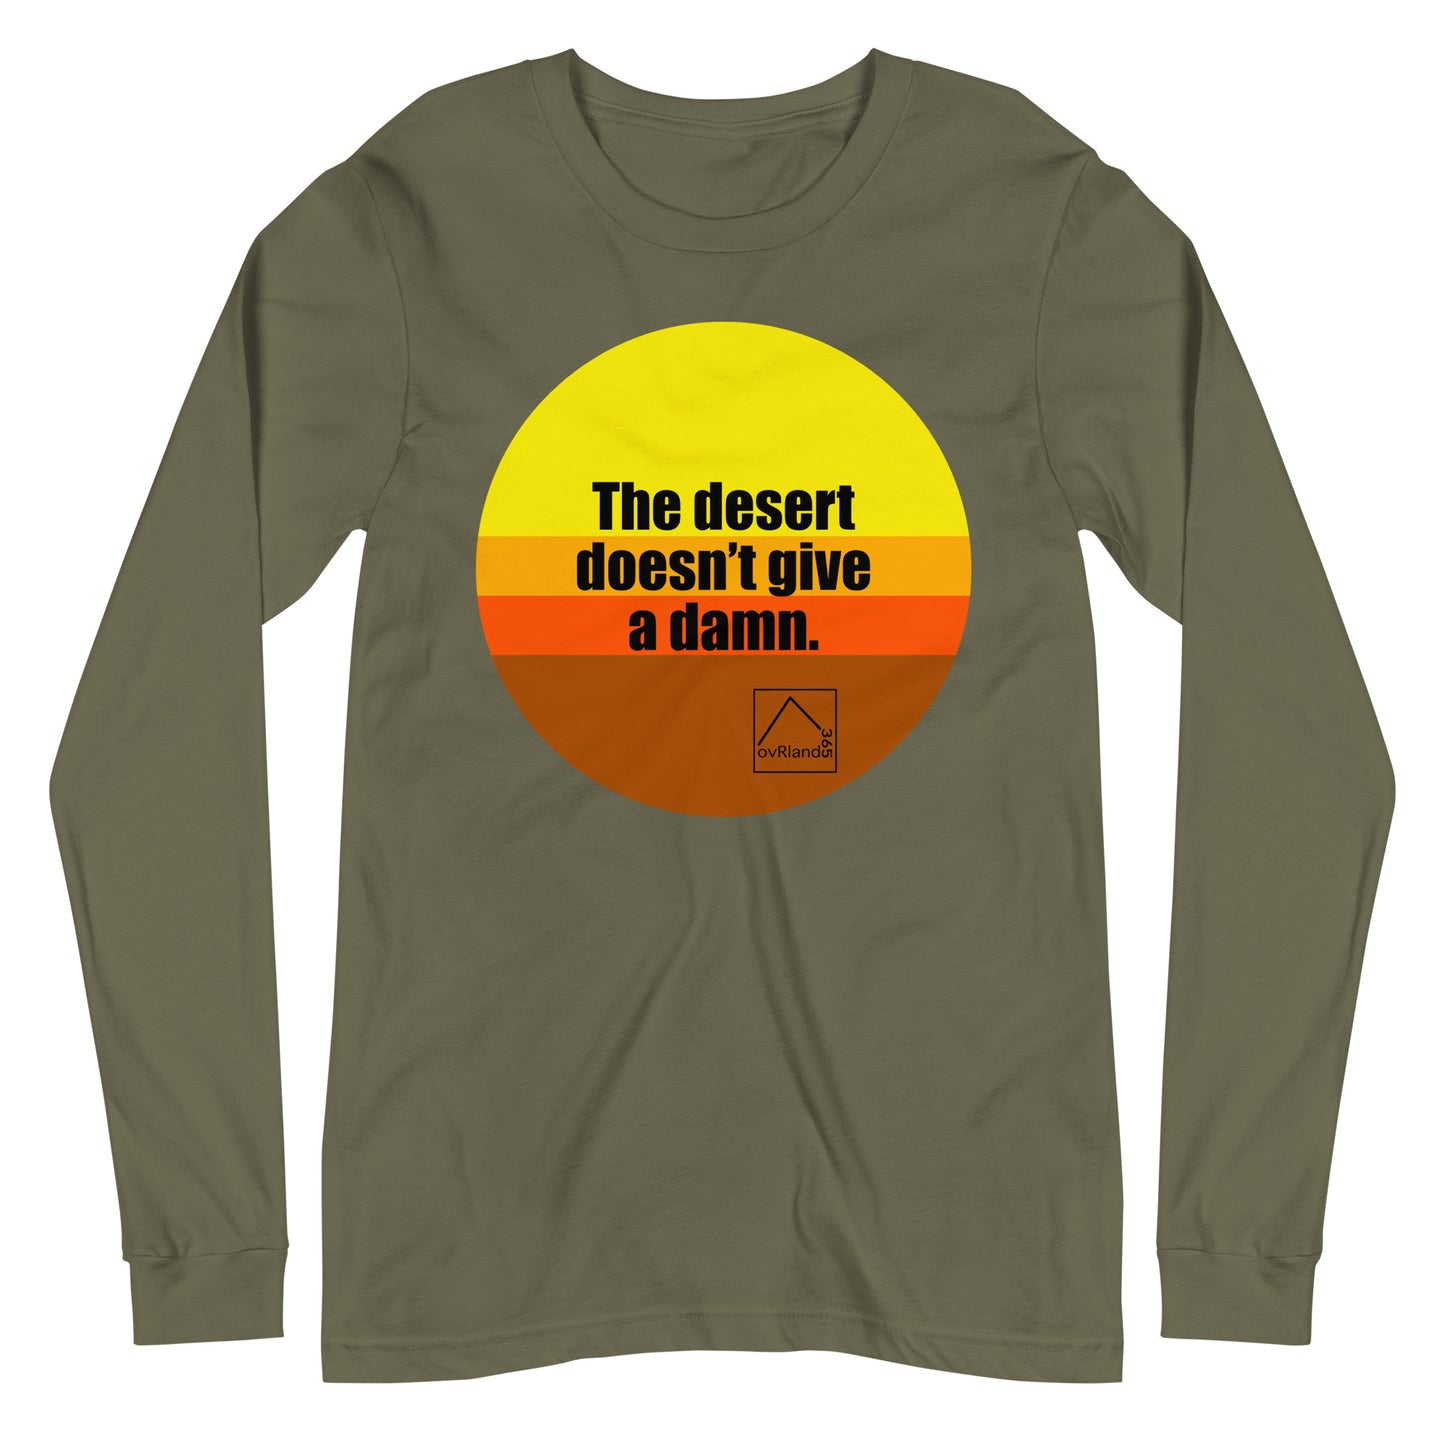 The desert doesn't give a damn. Green long-sleeve. overland365.com